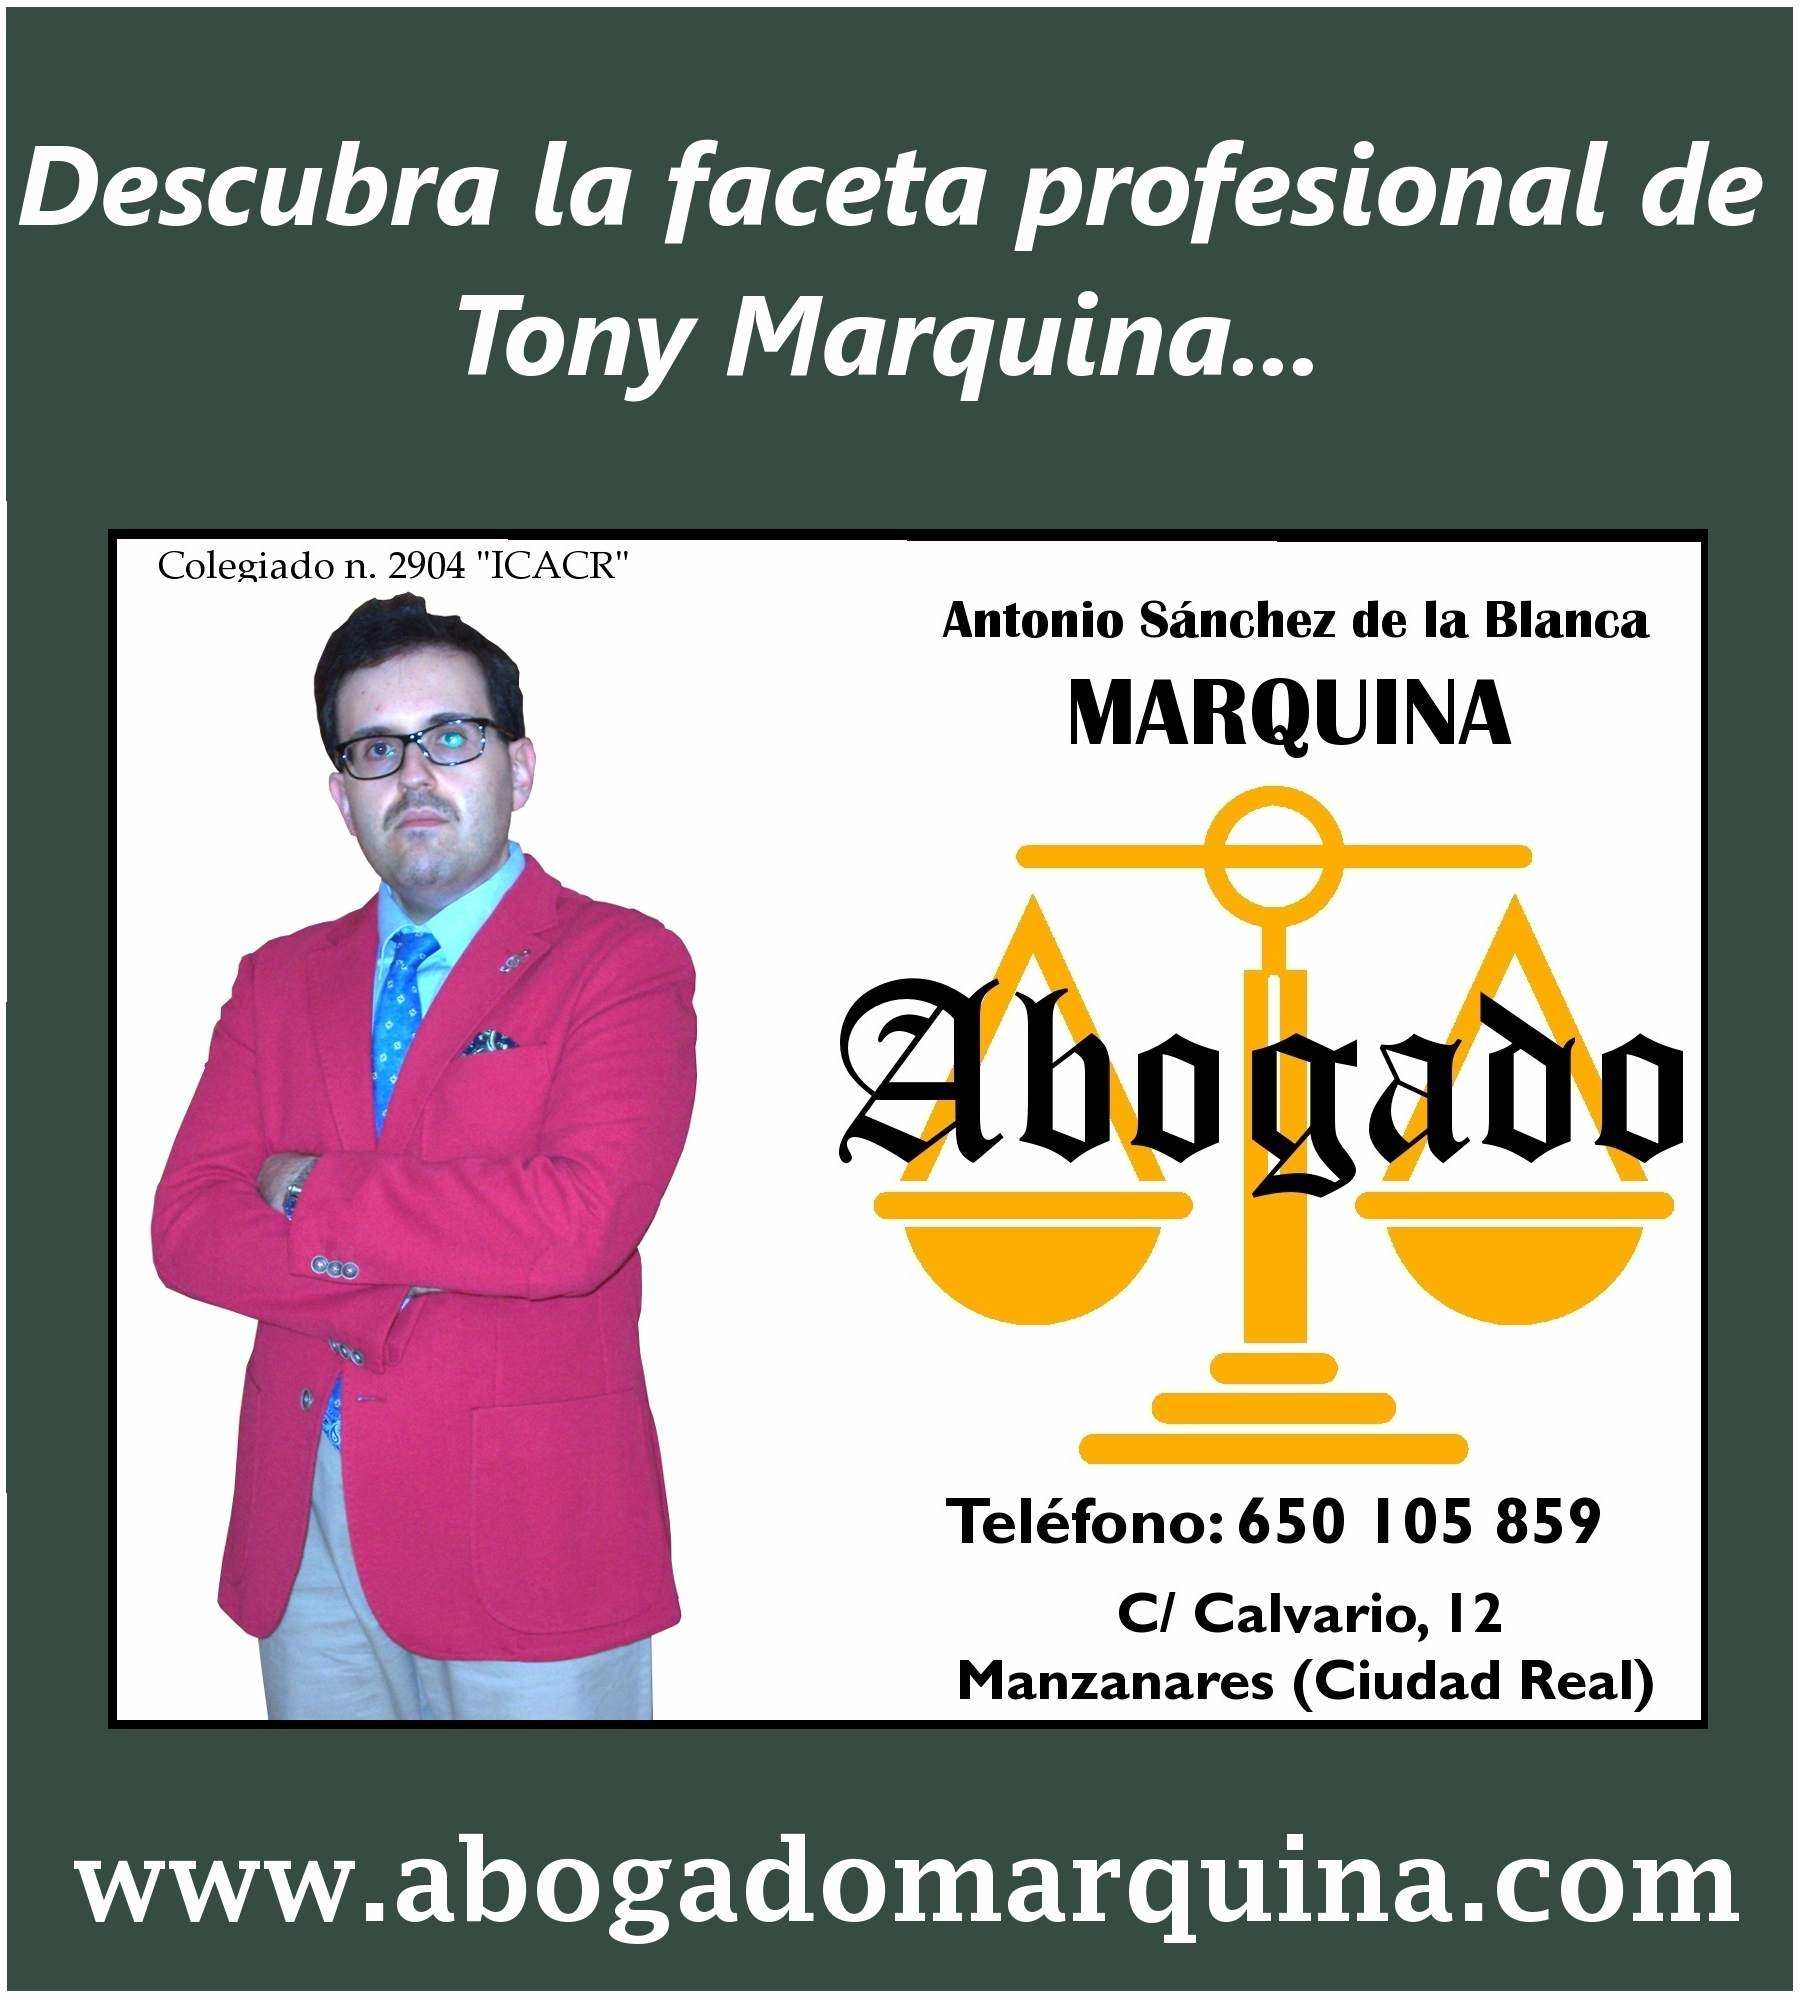 Abogado Marquina: La faceta profesional de Tony Marquina.